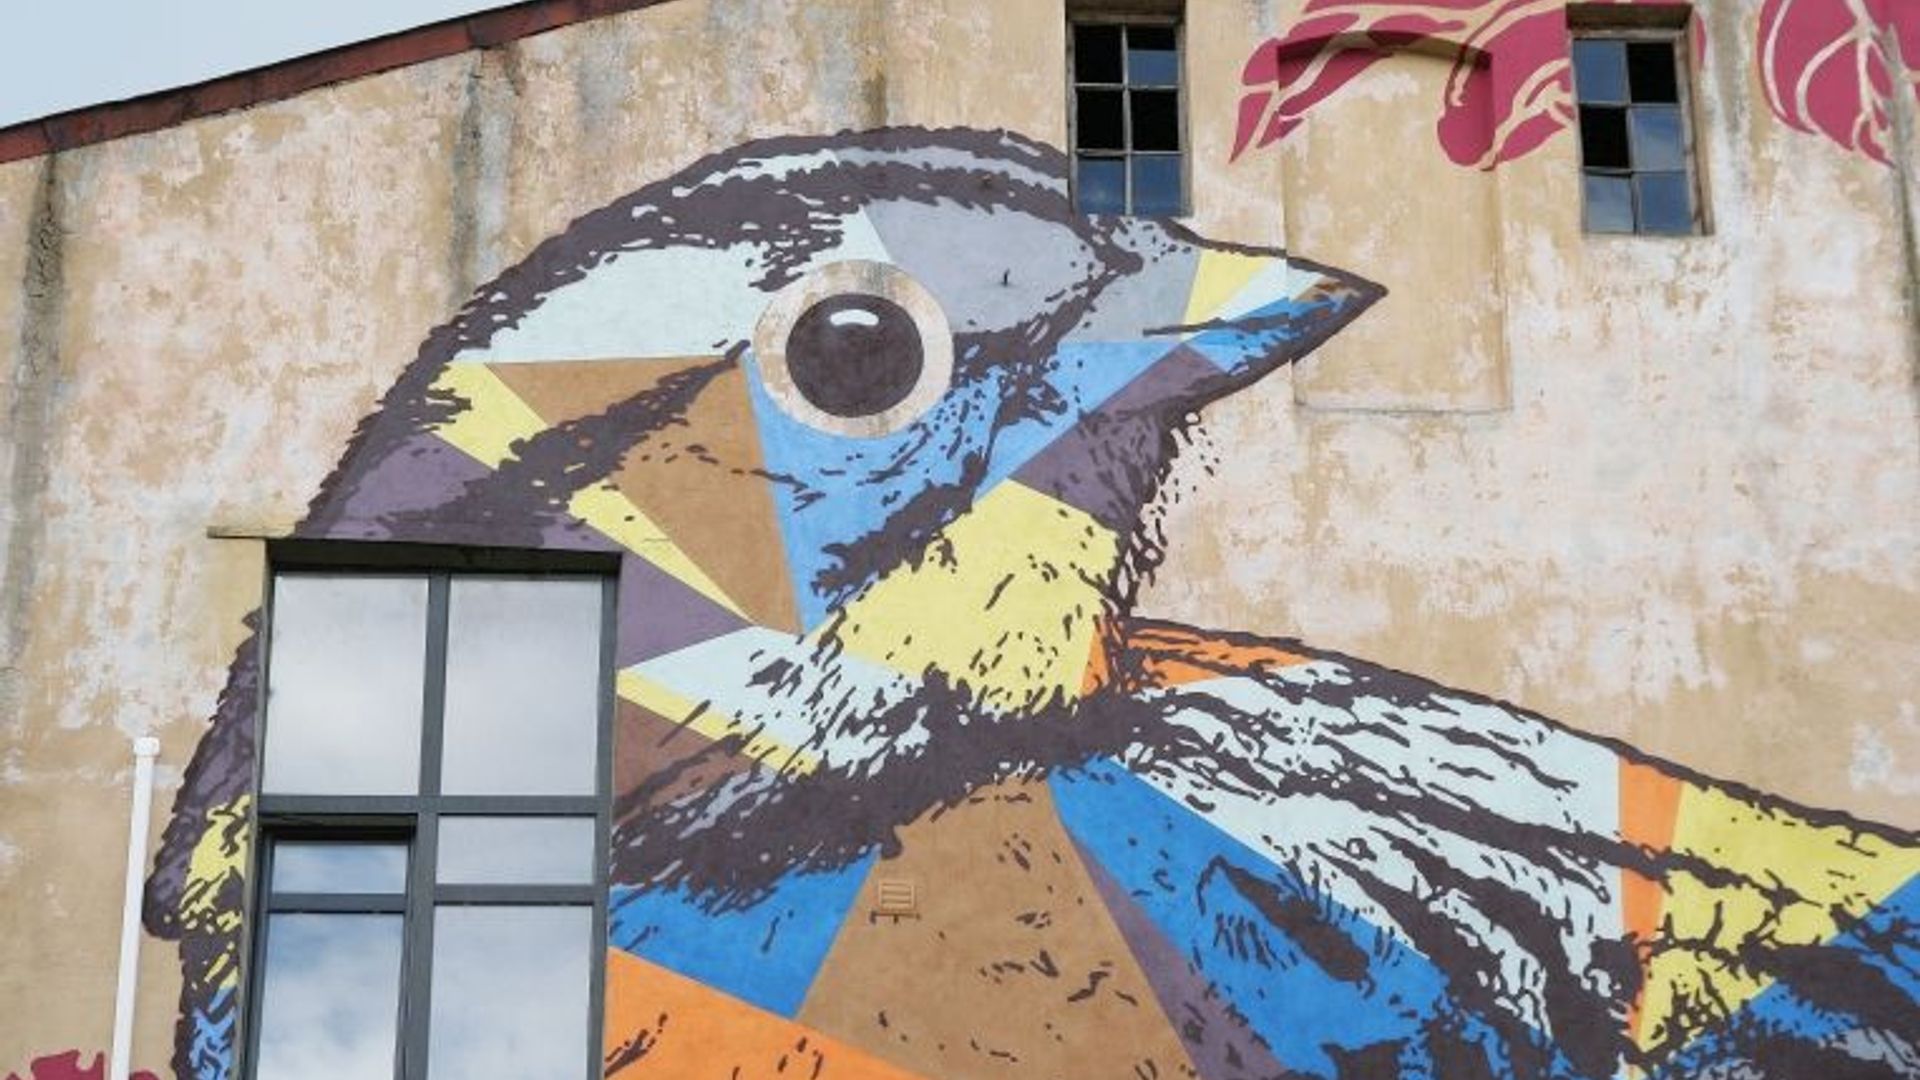 Mural Sparrow in Lofts